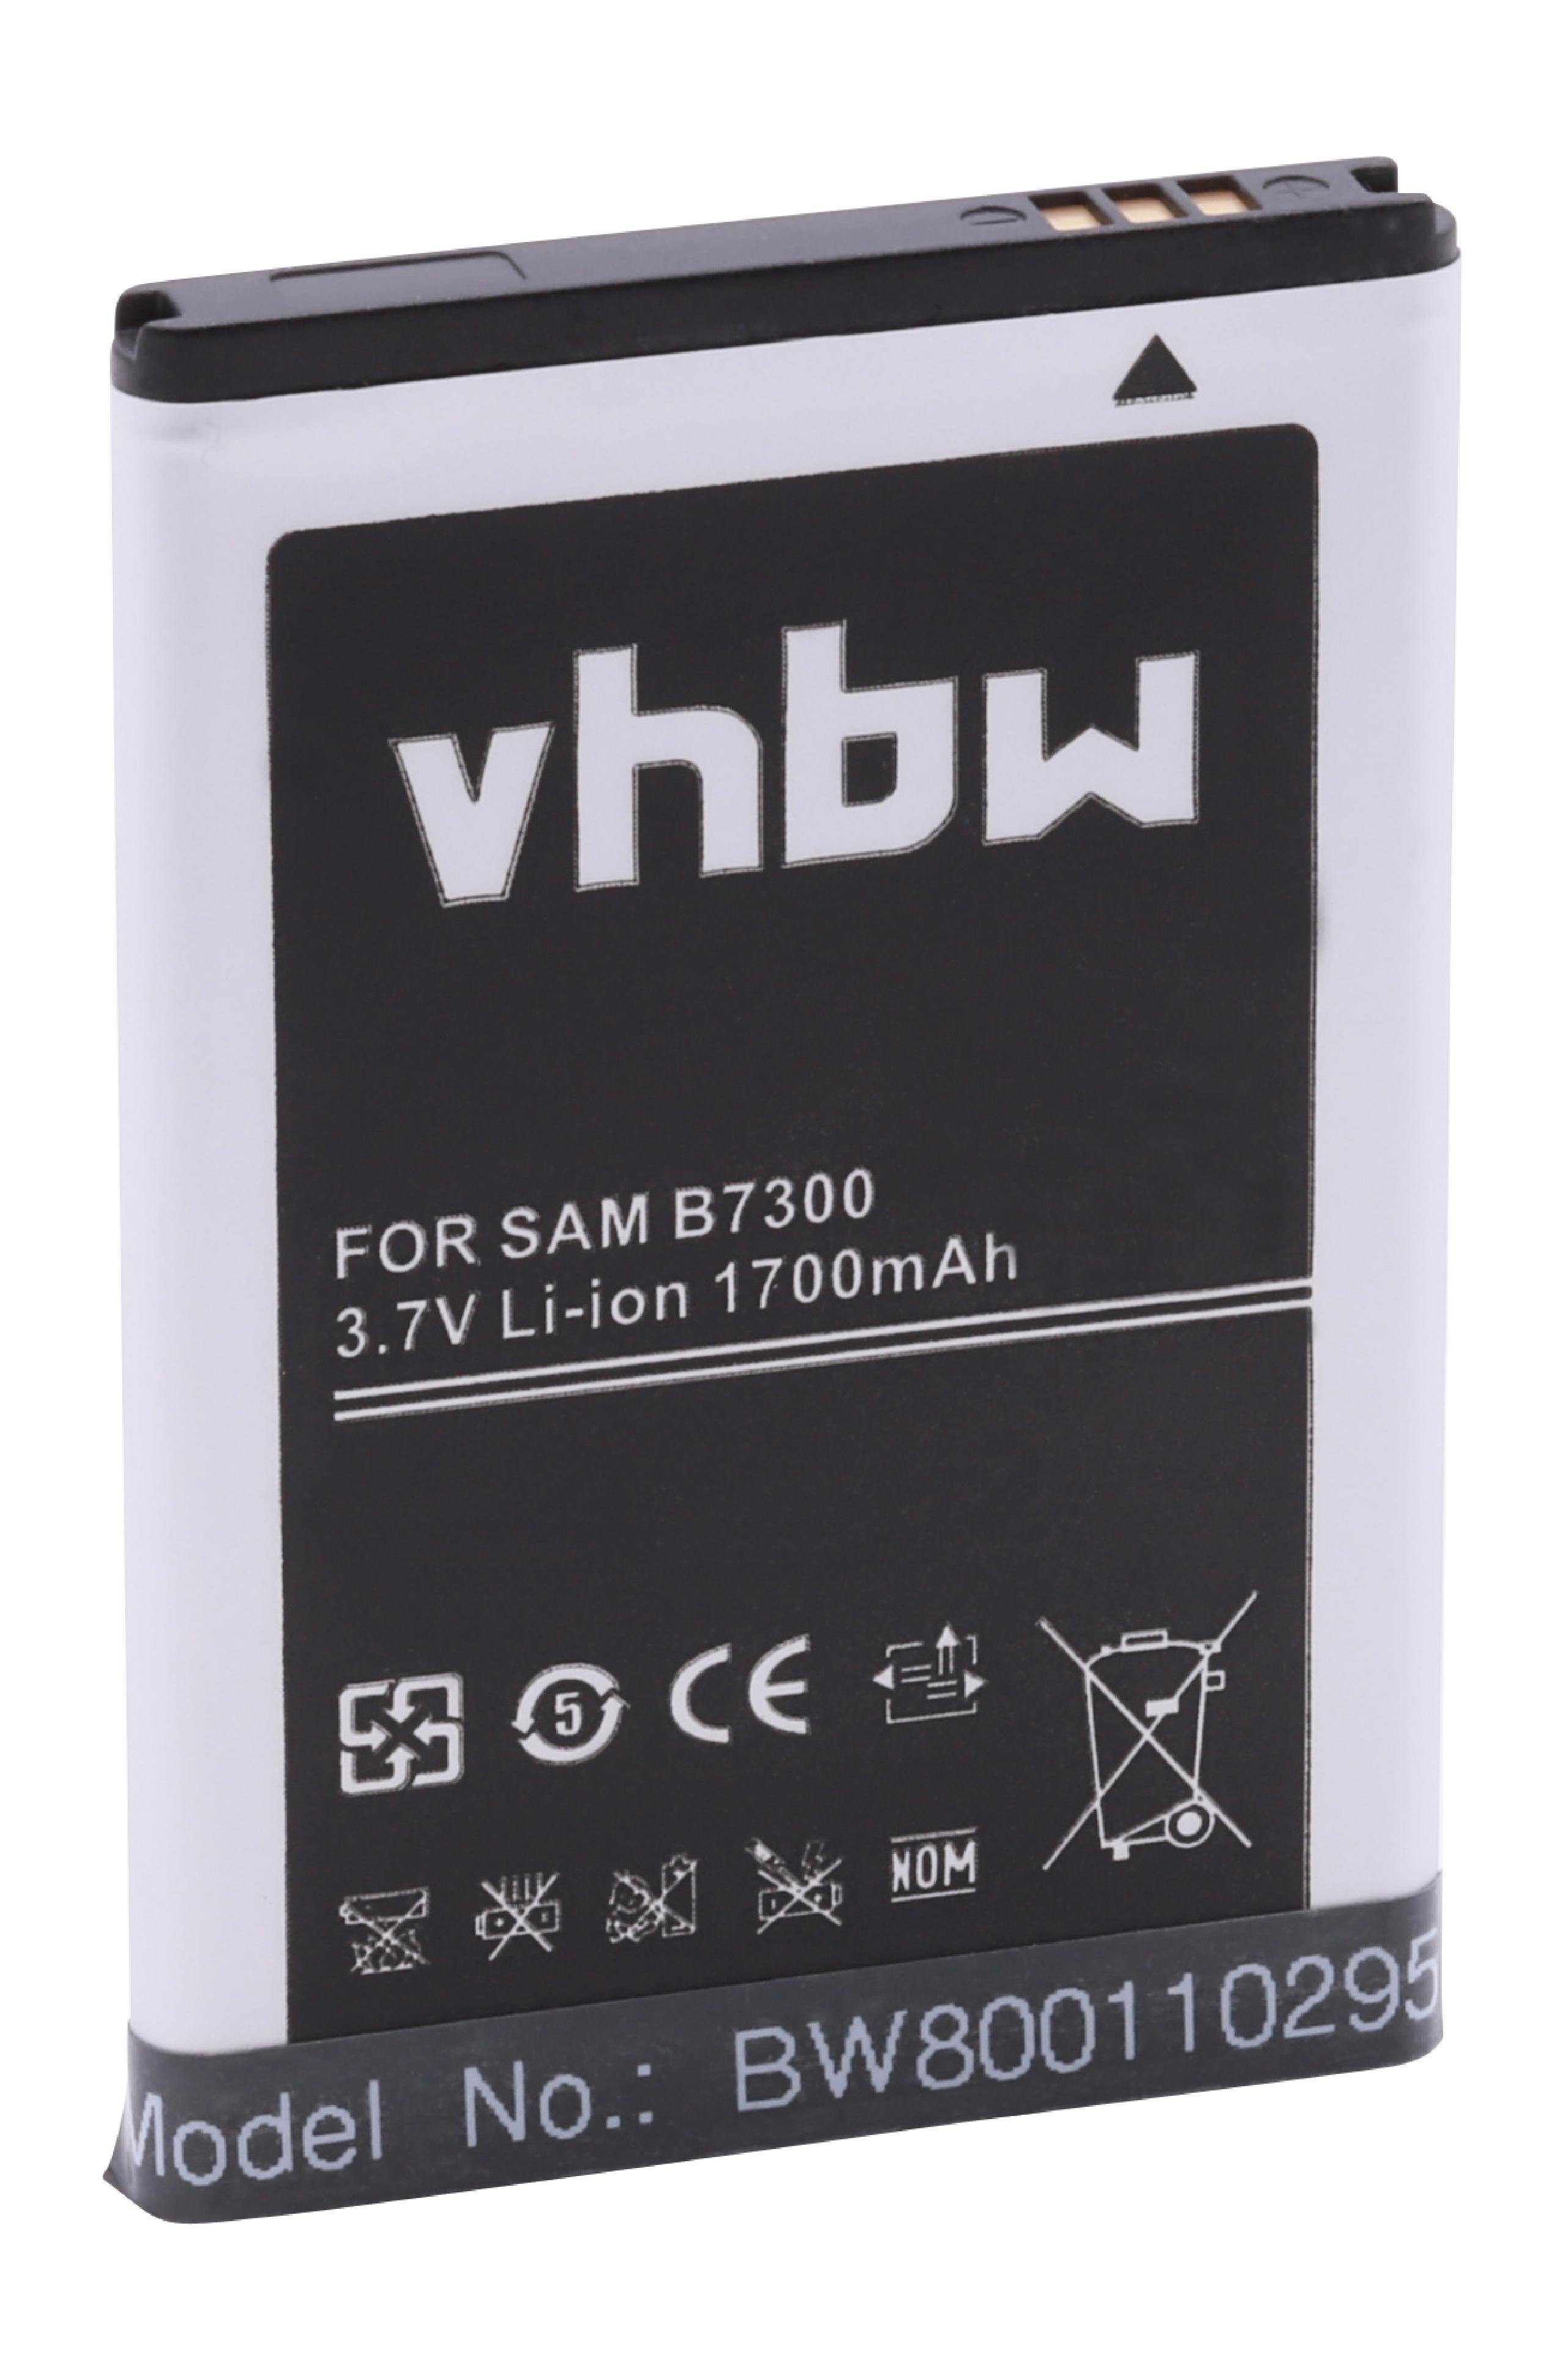 vhbw passend für Samsung Galaxy S Lightray 4G, Spica i5700, Teos i5800, Smartphone-Akku 1700 mAh